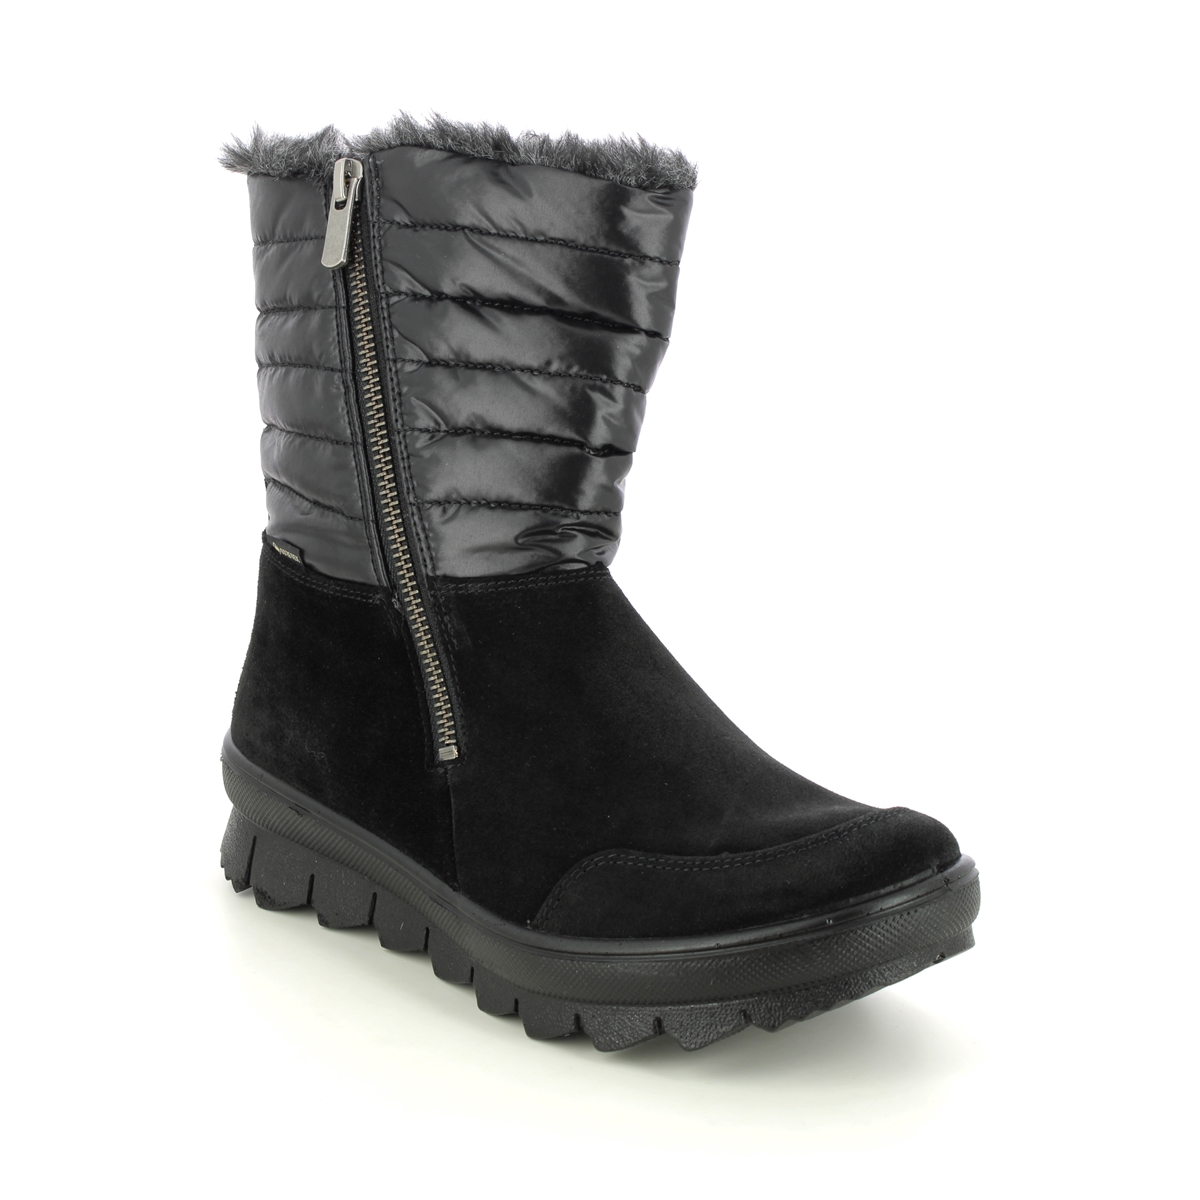 Legero Novara Zip Gtx Black Suede Womens Mid Calf Boots 2009900-0000 In Size 6 In Plain Black Suede